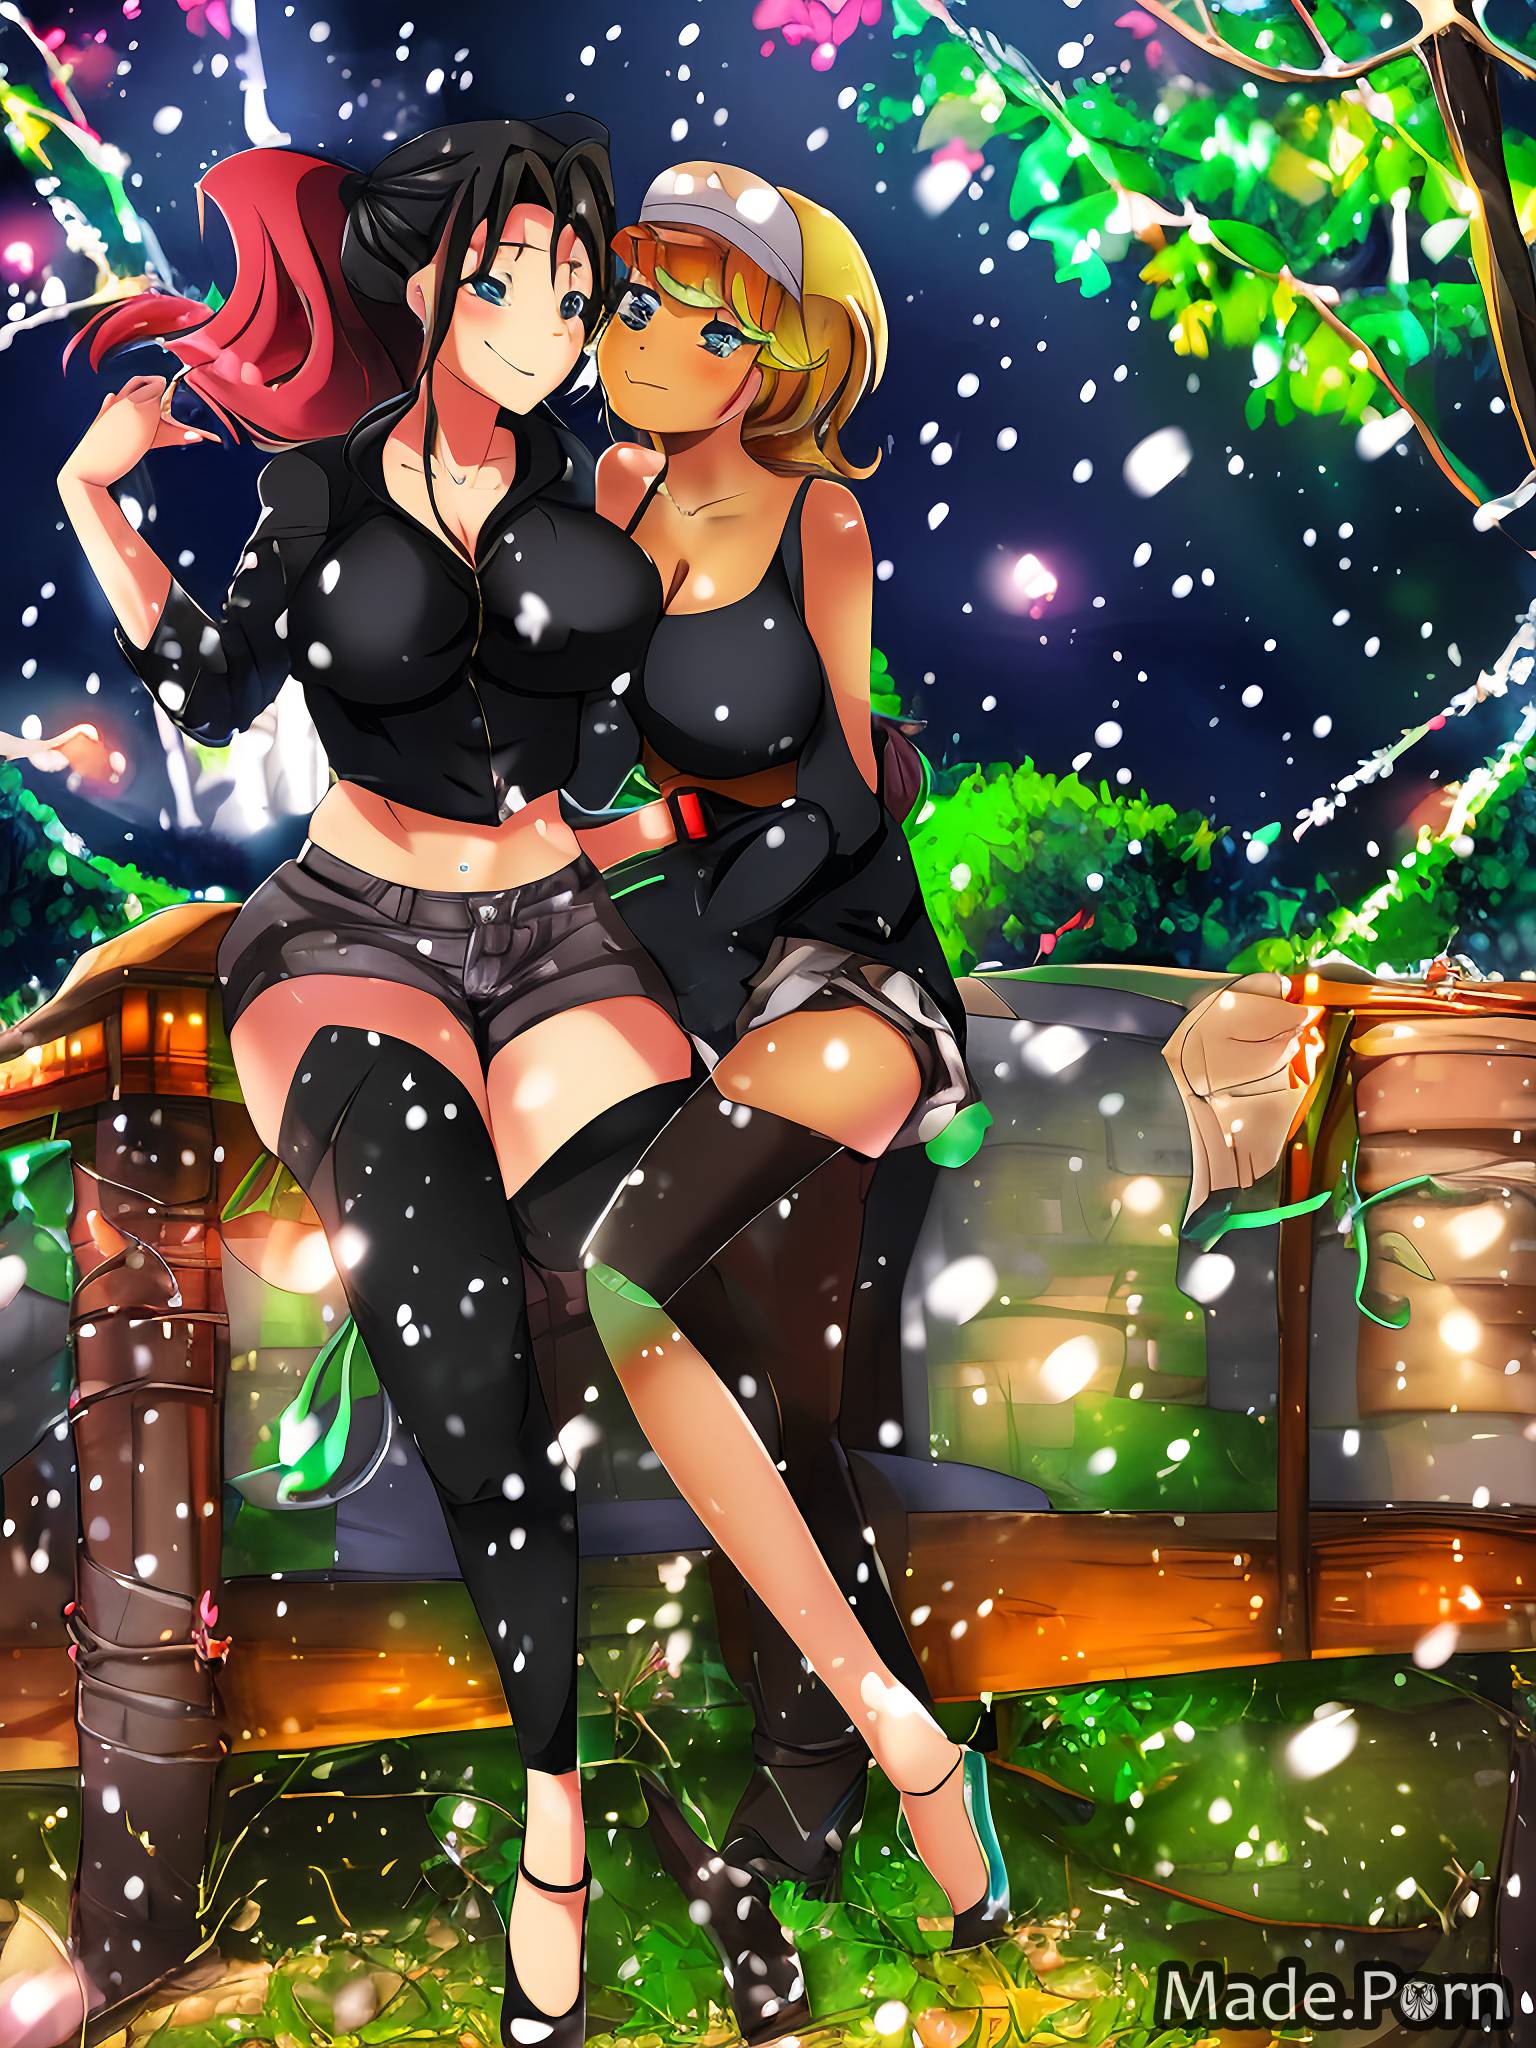 Anime Club Porn - Porn image of big tits lesbian snowfall happy anime club black created by AI